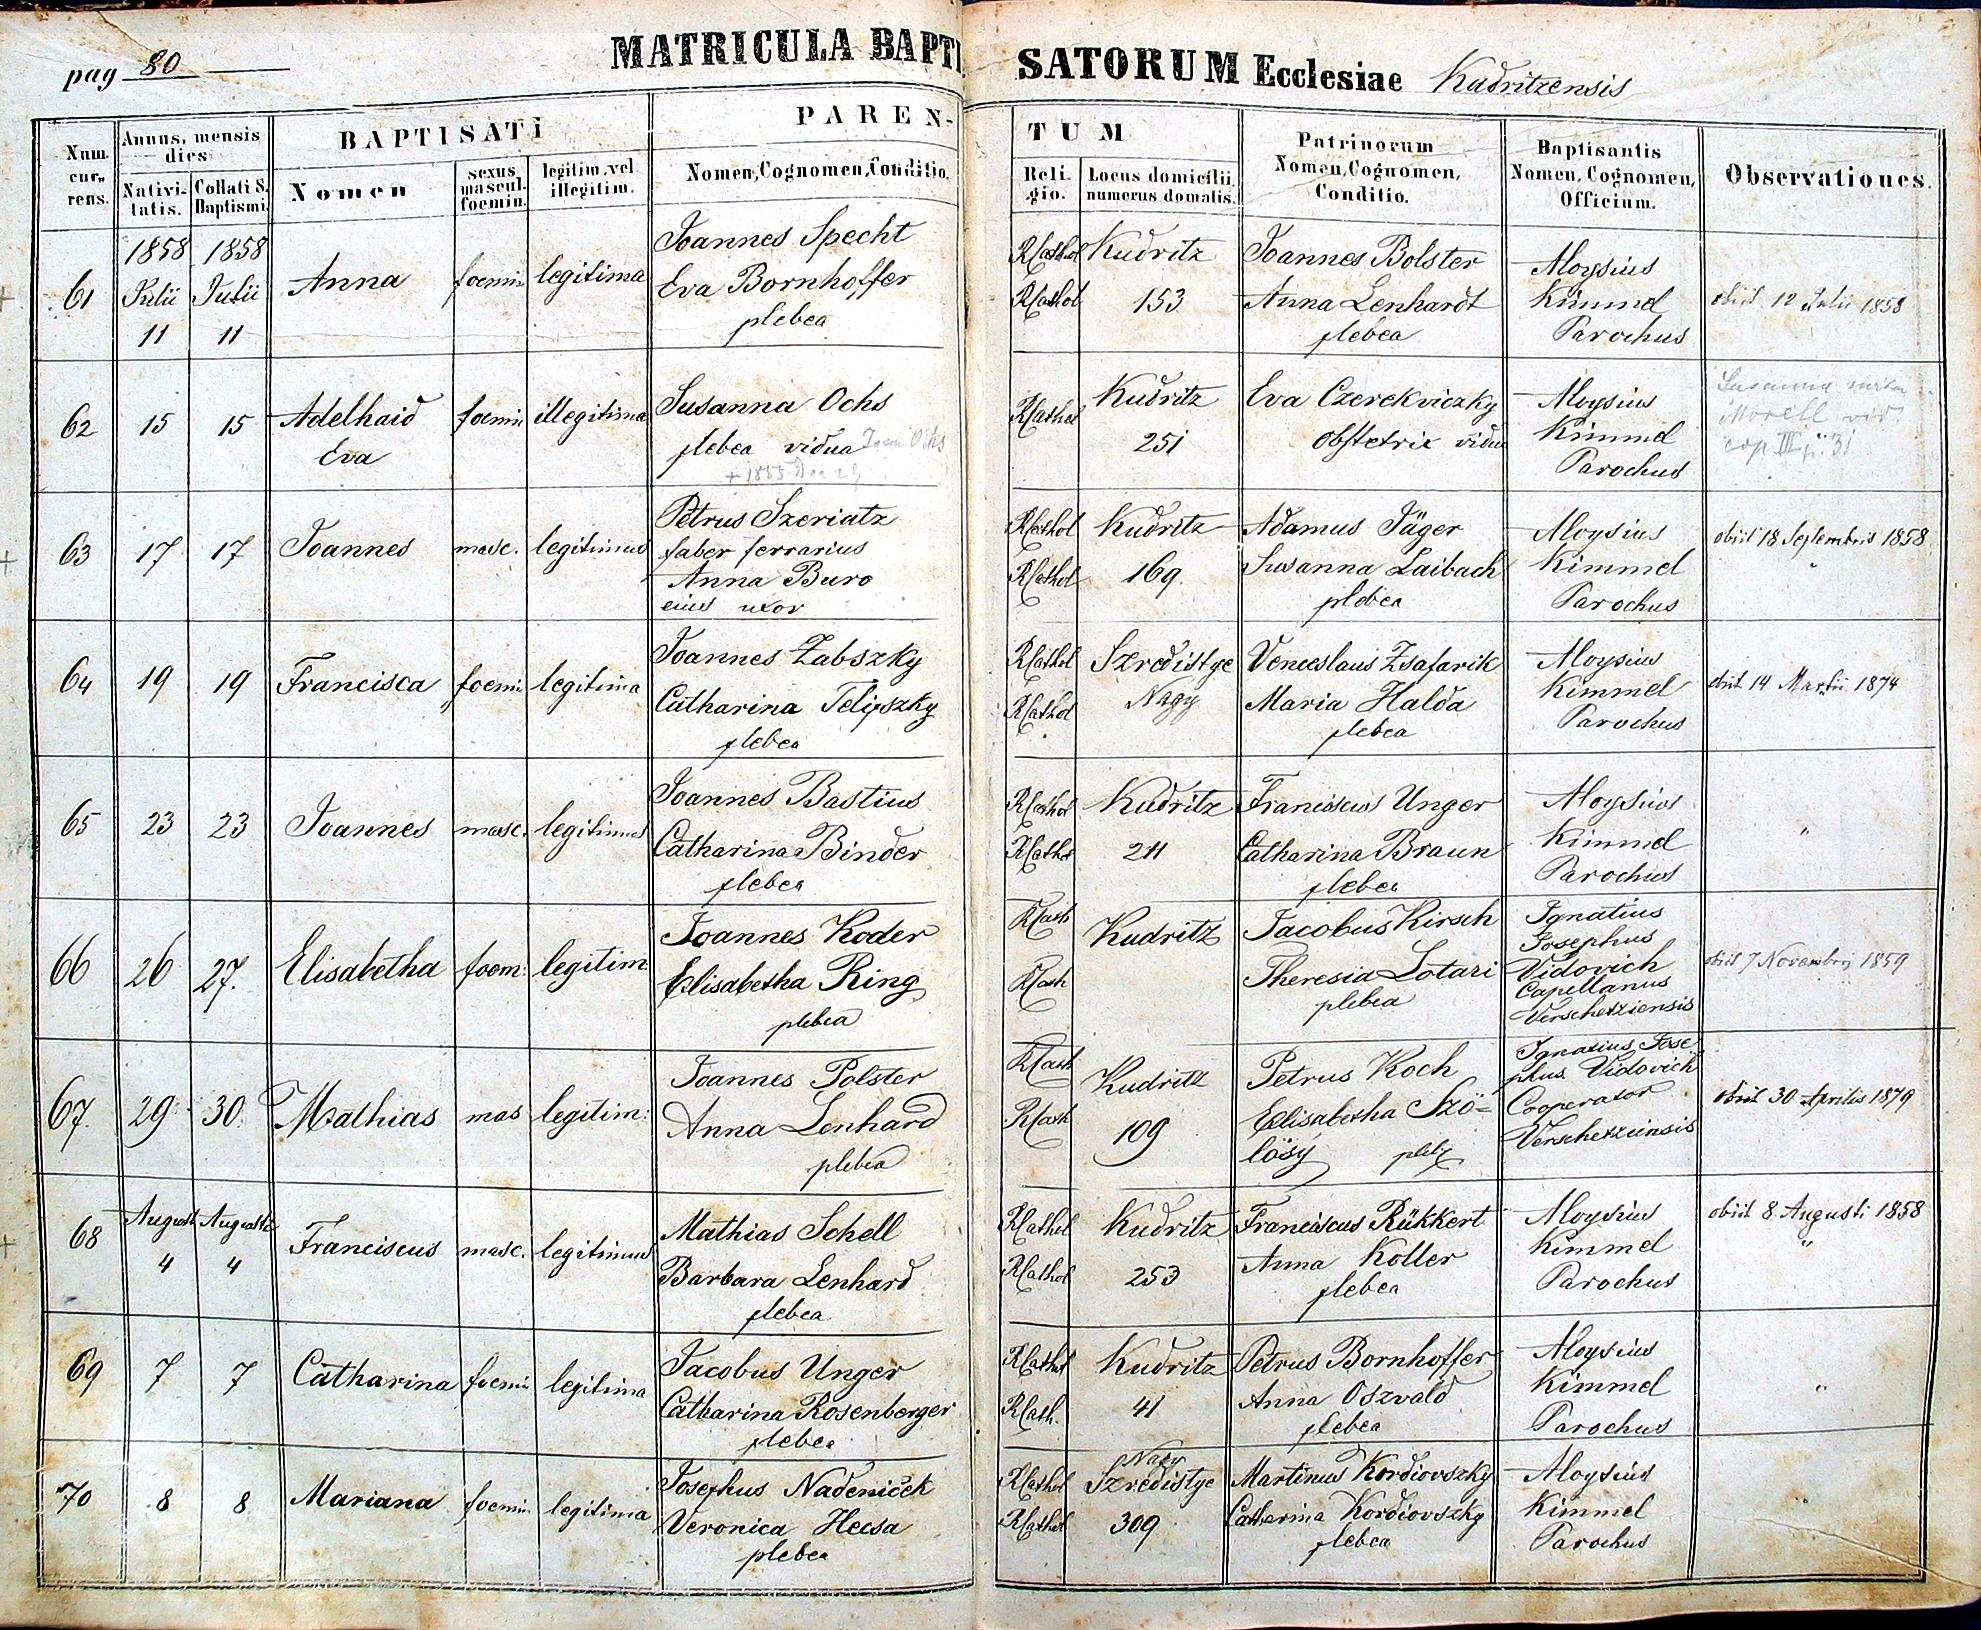 images/church_records/BIRTHS/1852-1870B/080